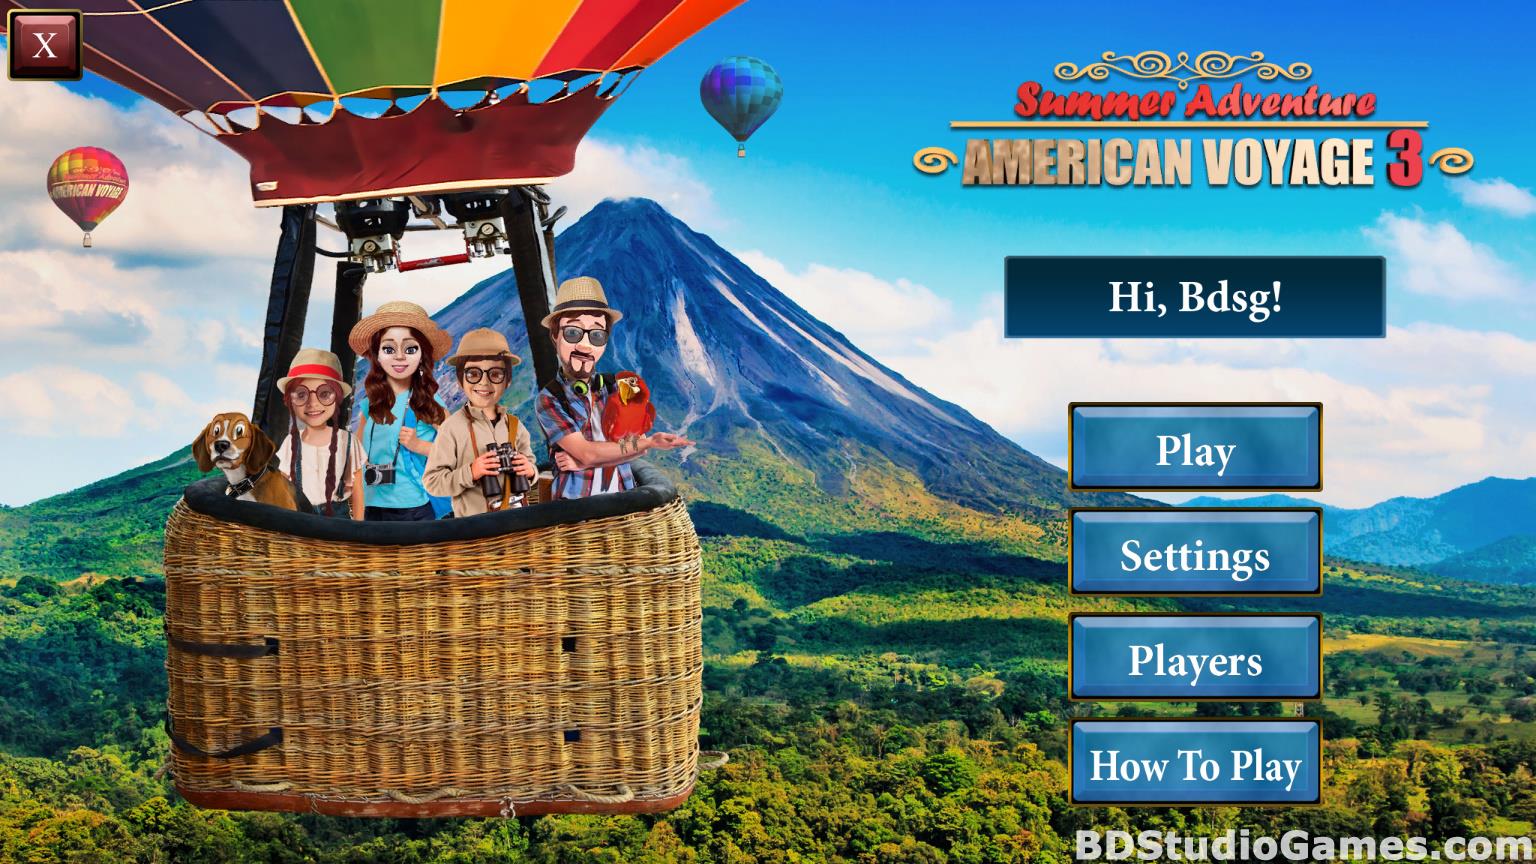 Summer Adventure: American Voyage 3 Free Download Screenshots 01